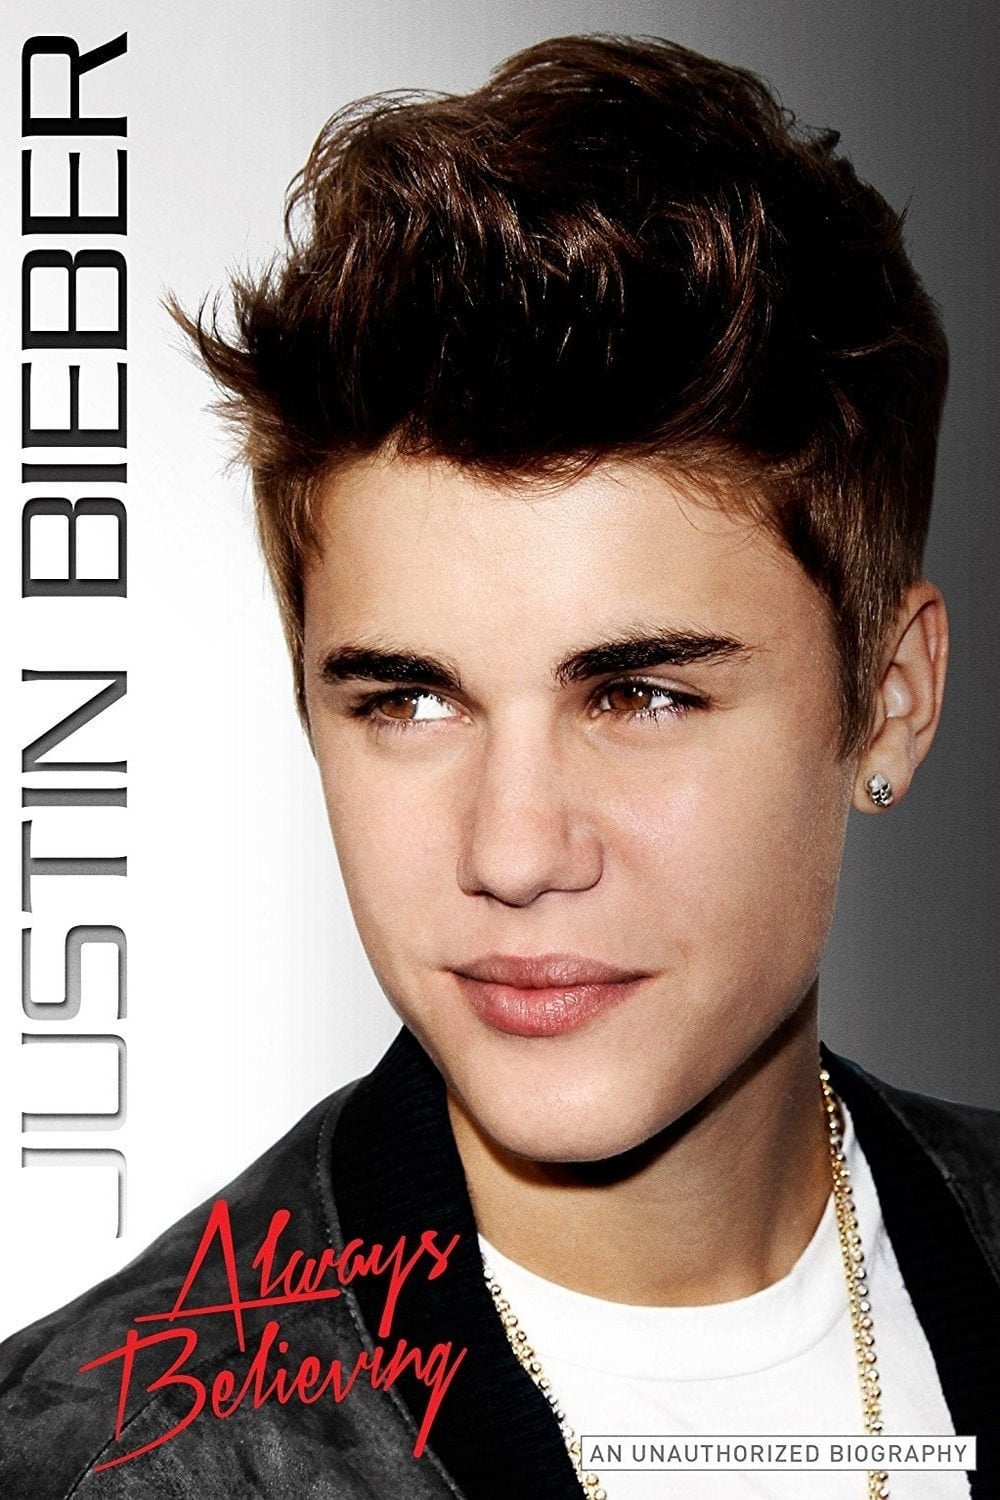 Justin Bieber: Always Believing (2013)